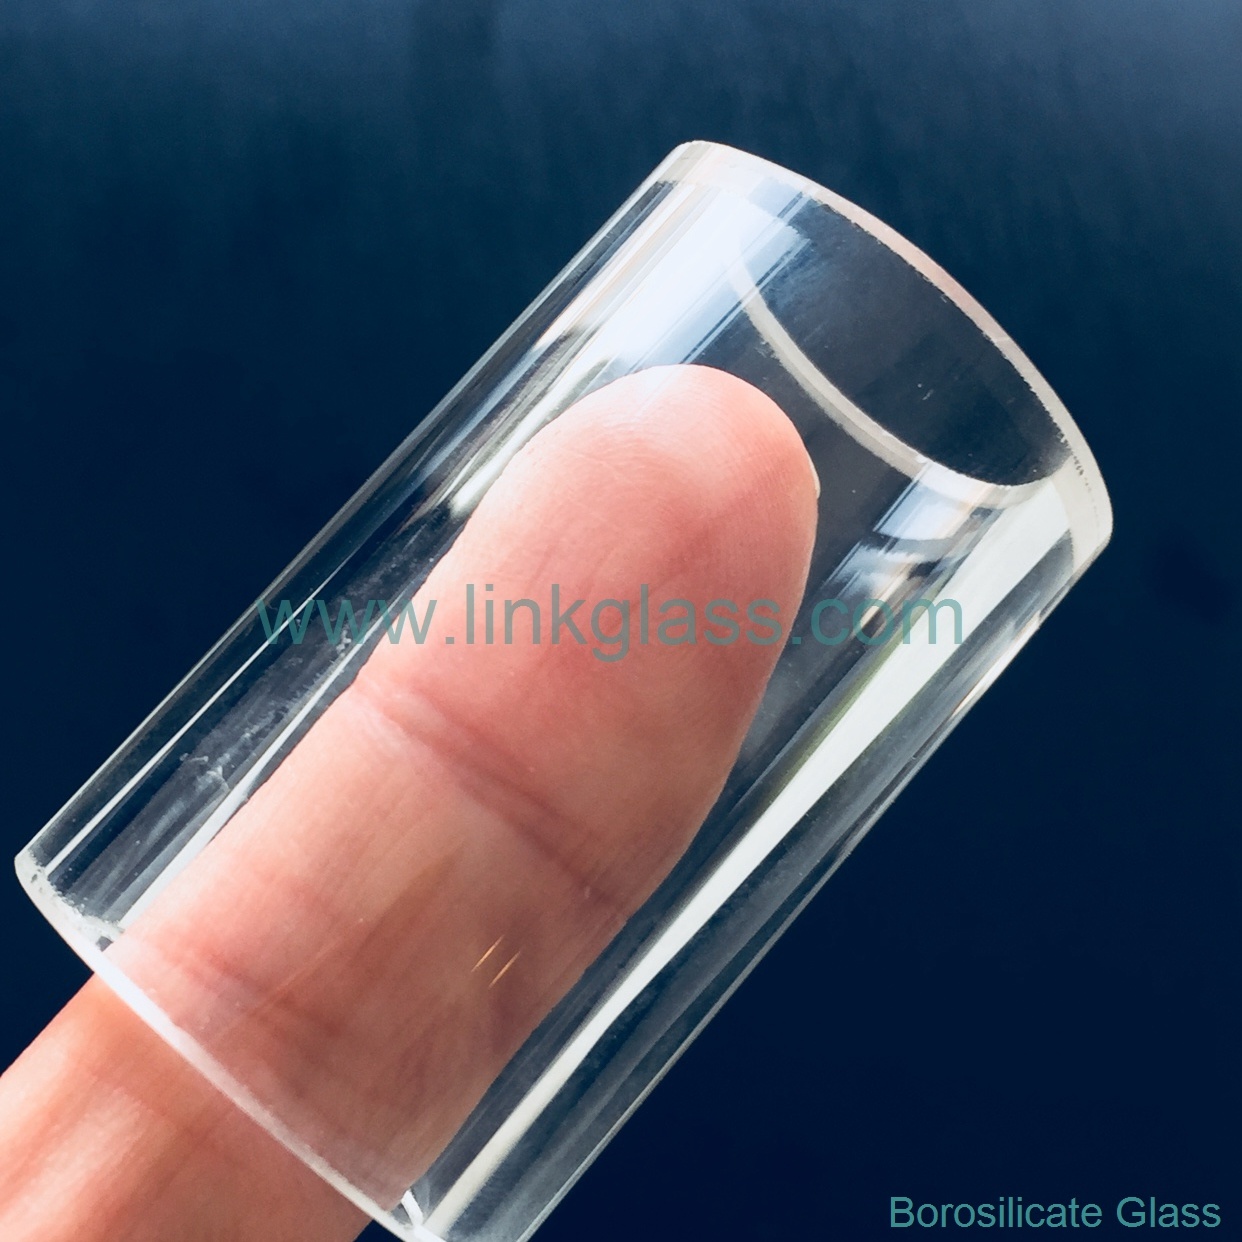 Gauge Glass/Borosilicate Glass/Pyrex Glass/Sight Glass